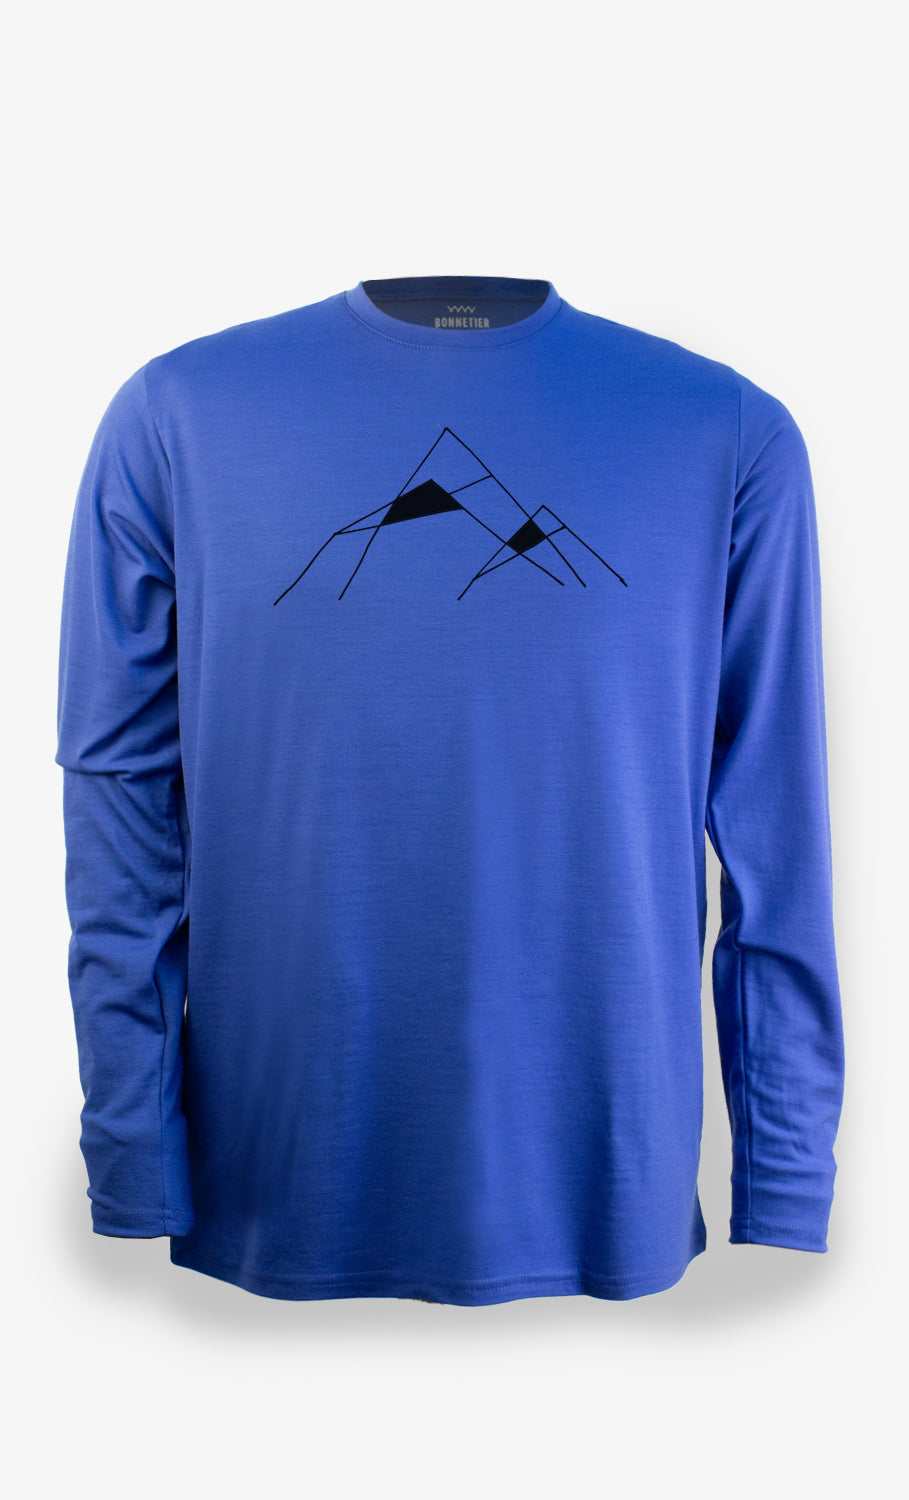 Techcrew Men's Merino Long Sleeve Royal Blue - Mountain graph